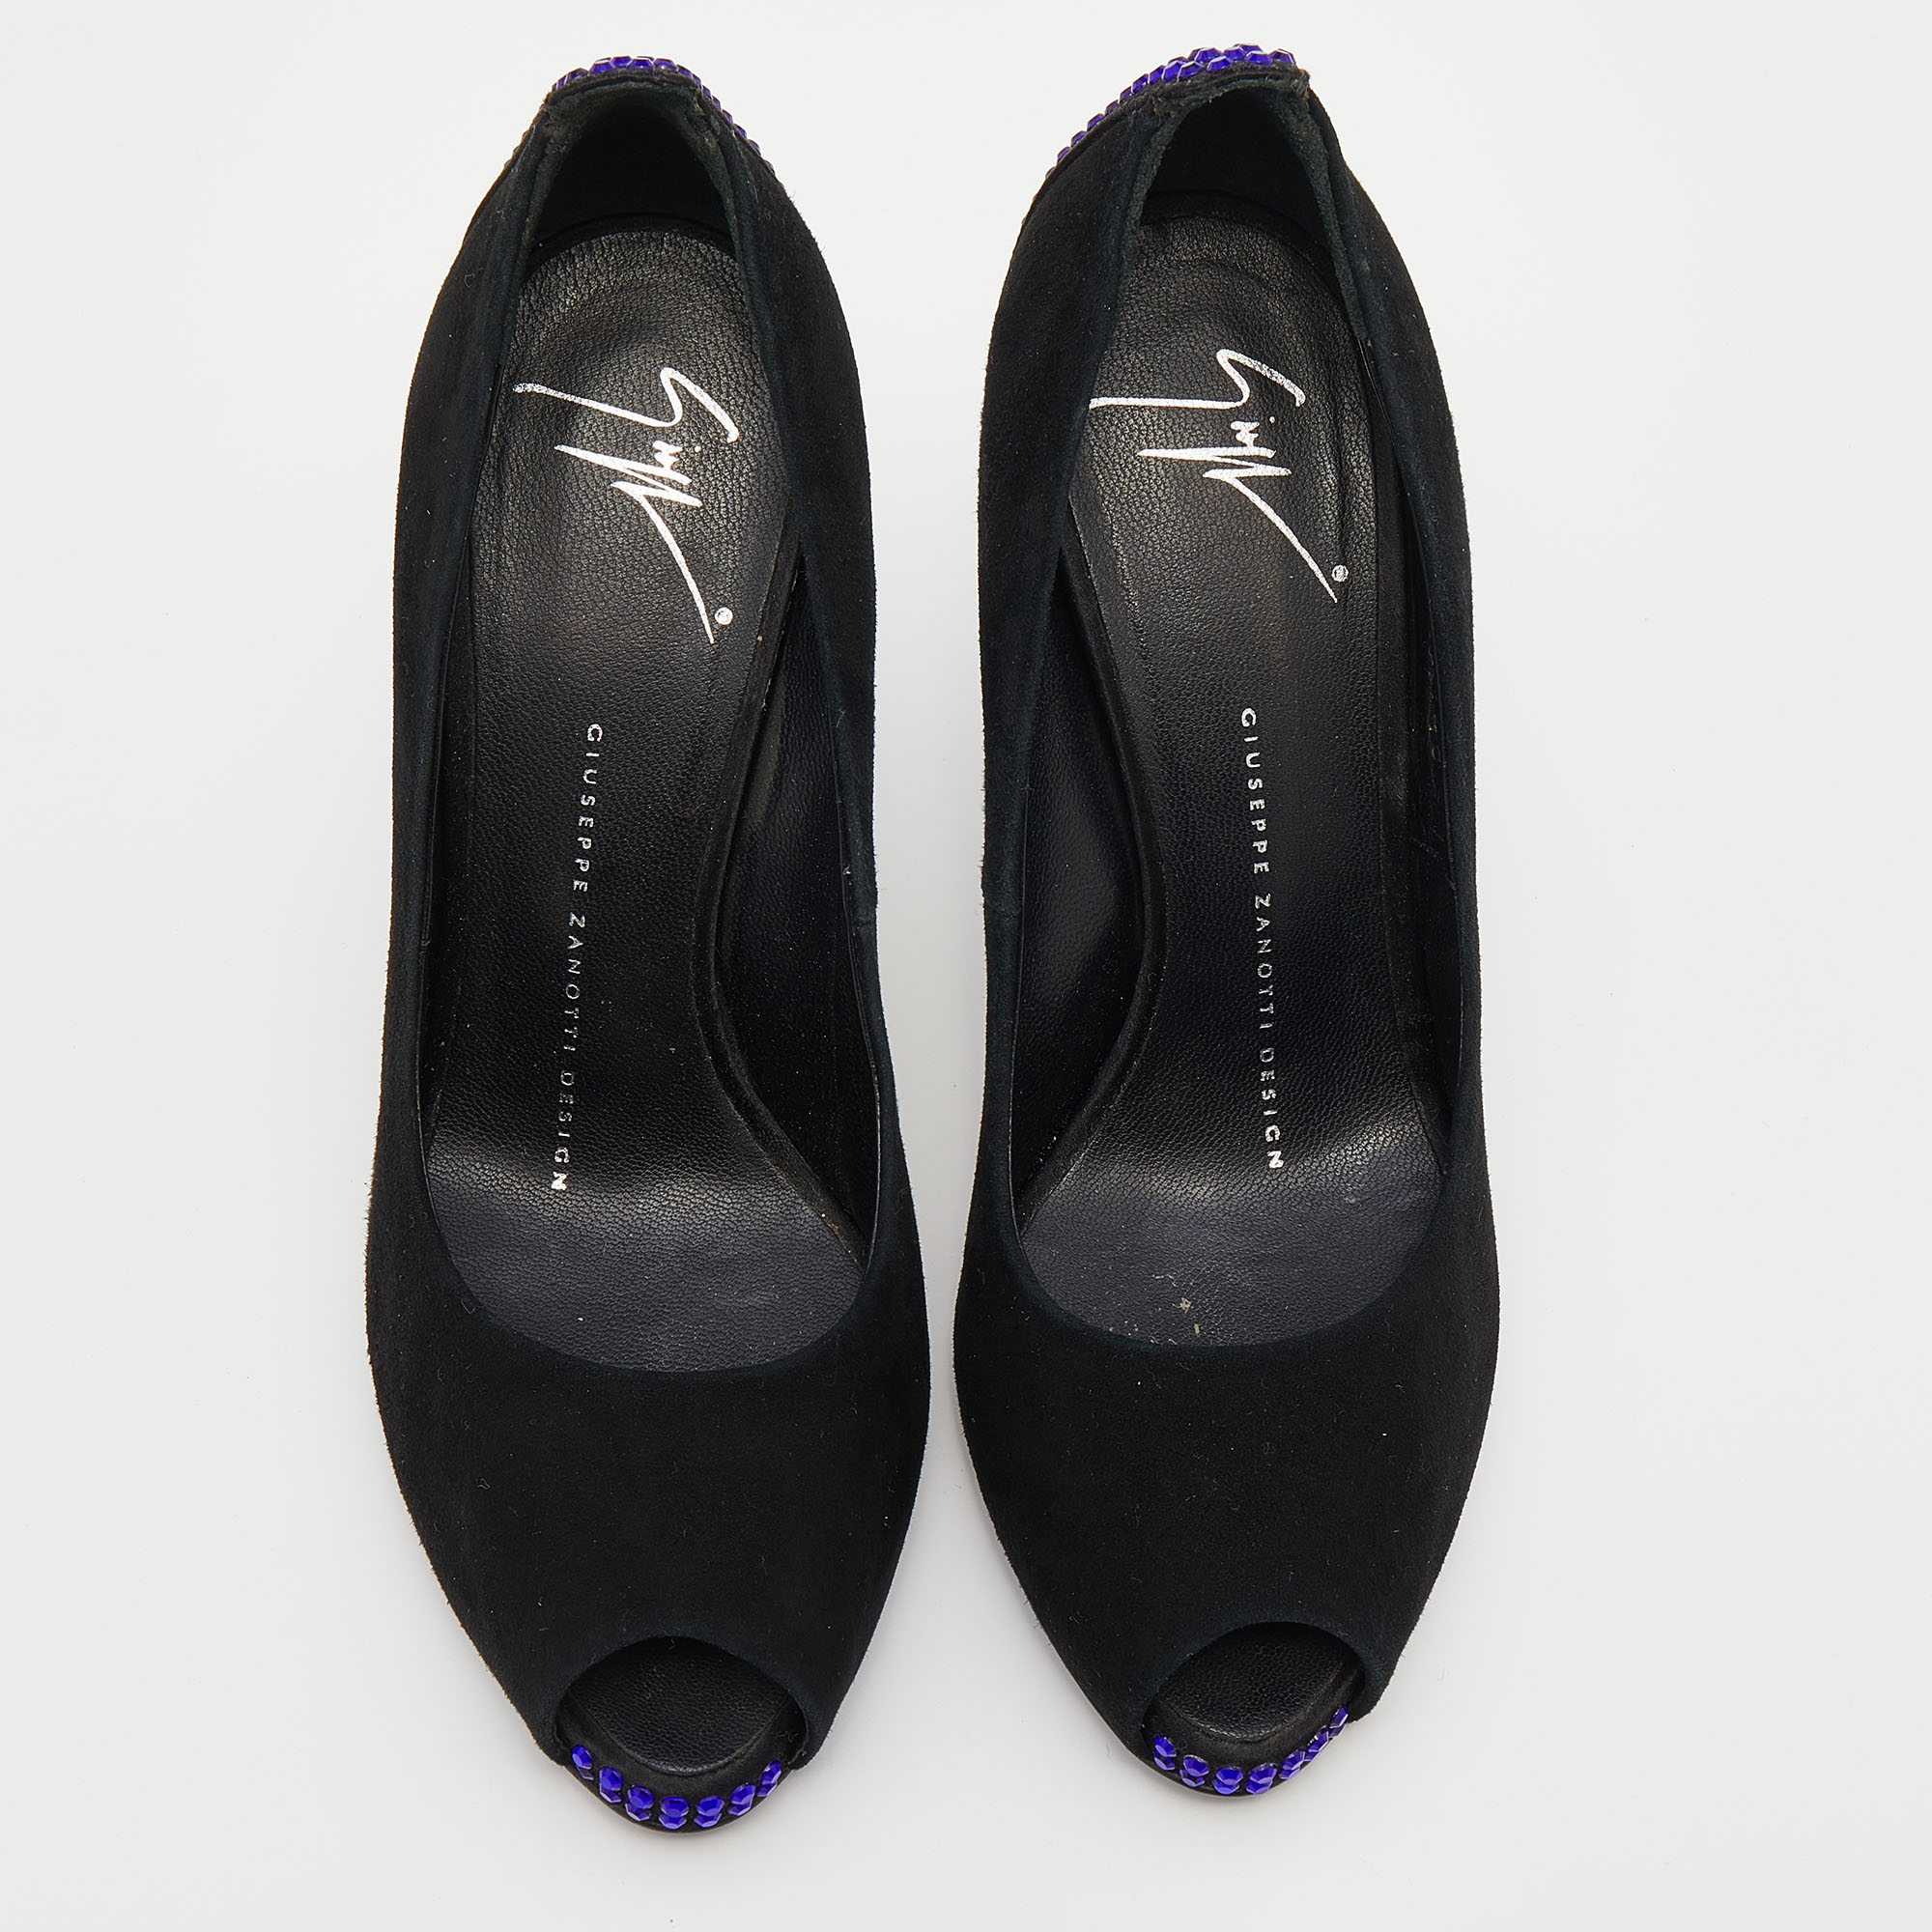 Giuseppe Zanotti Black Suede Embellished Peep Toe Pumps Size 36